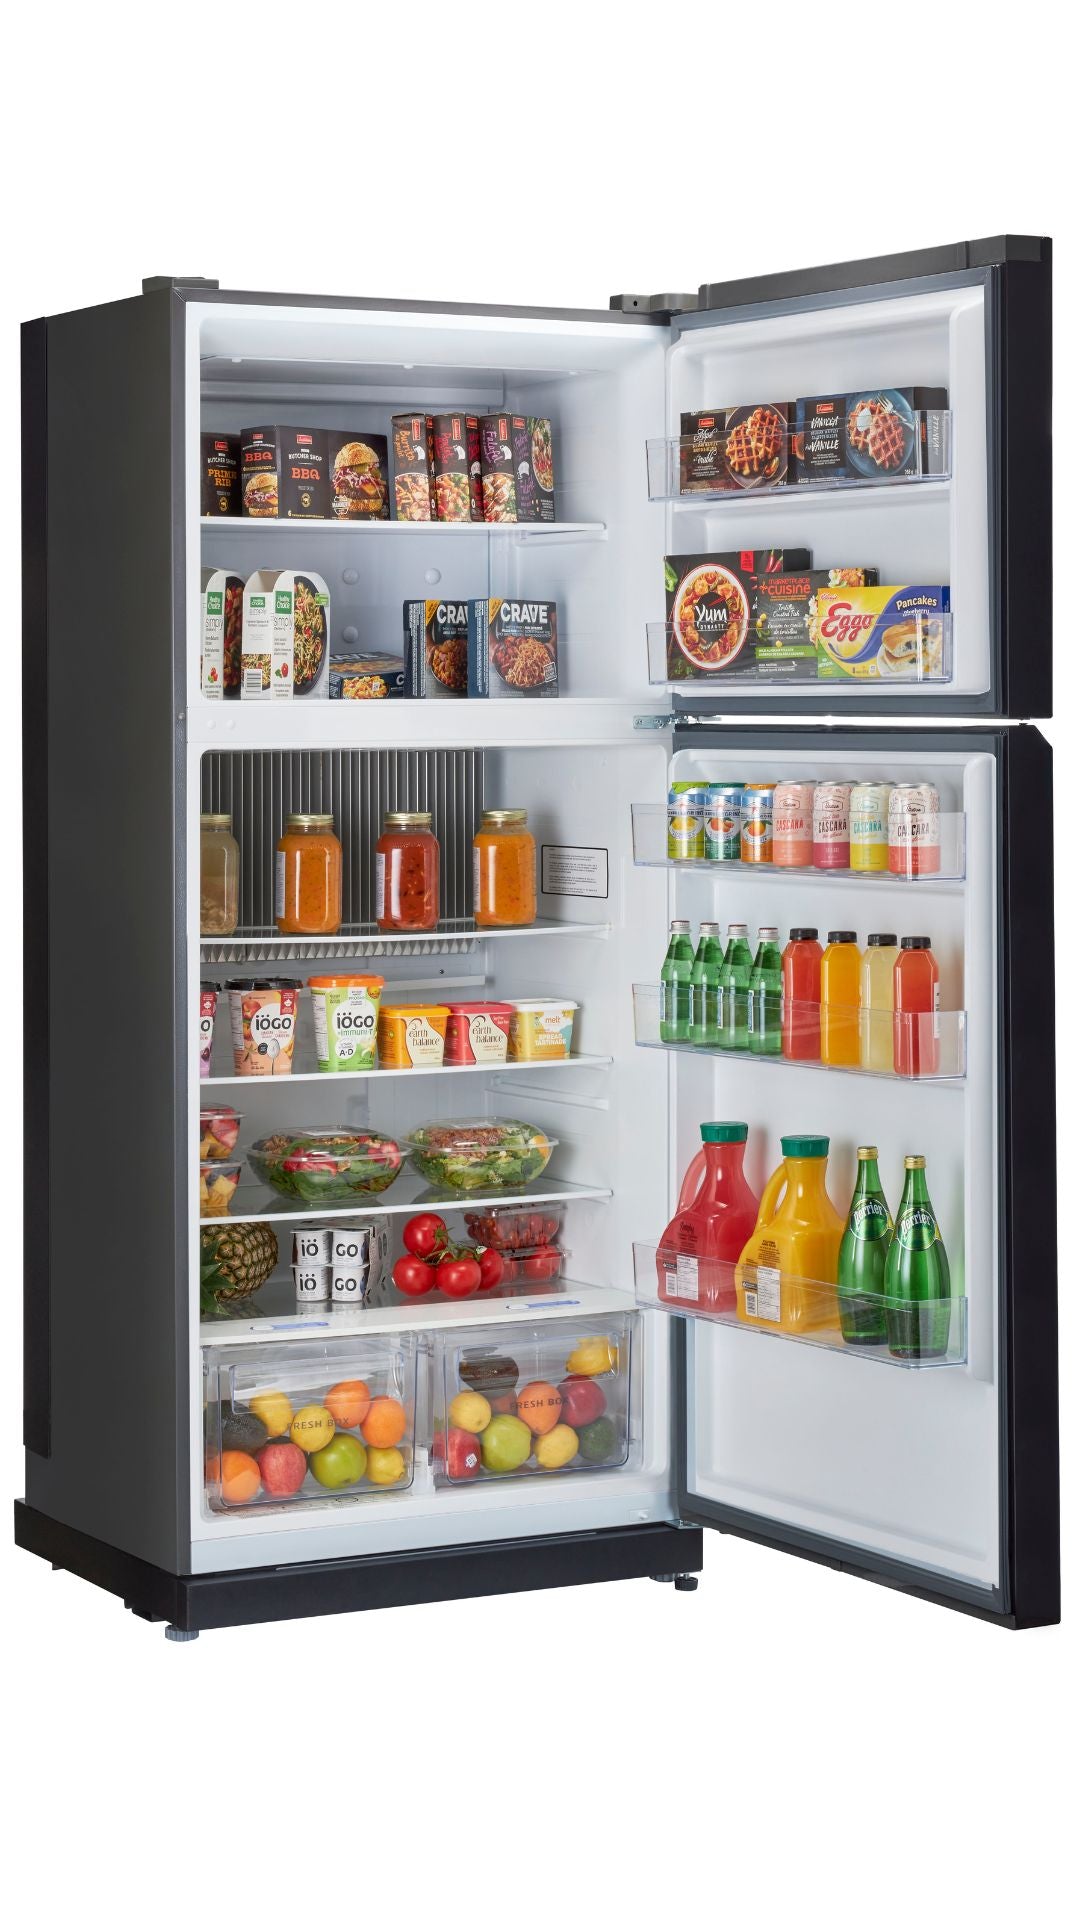 Unique Appliances - 34.6 Inch 19 cu. ft Top Mount Refrigerator in Midnight Black - UGP-19C CM B